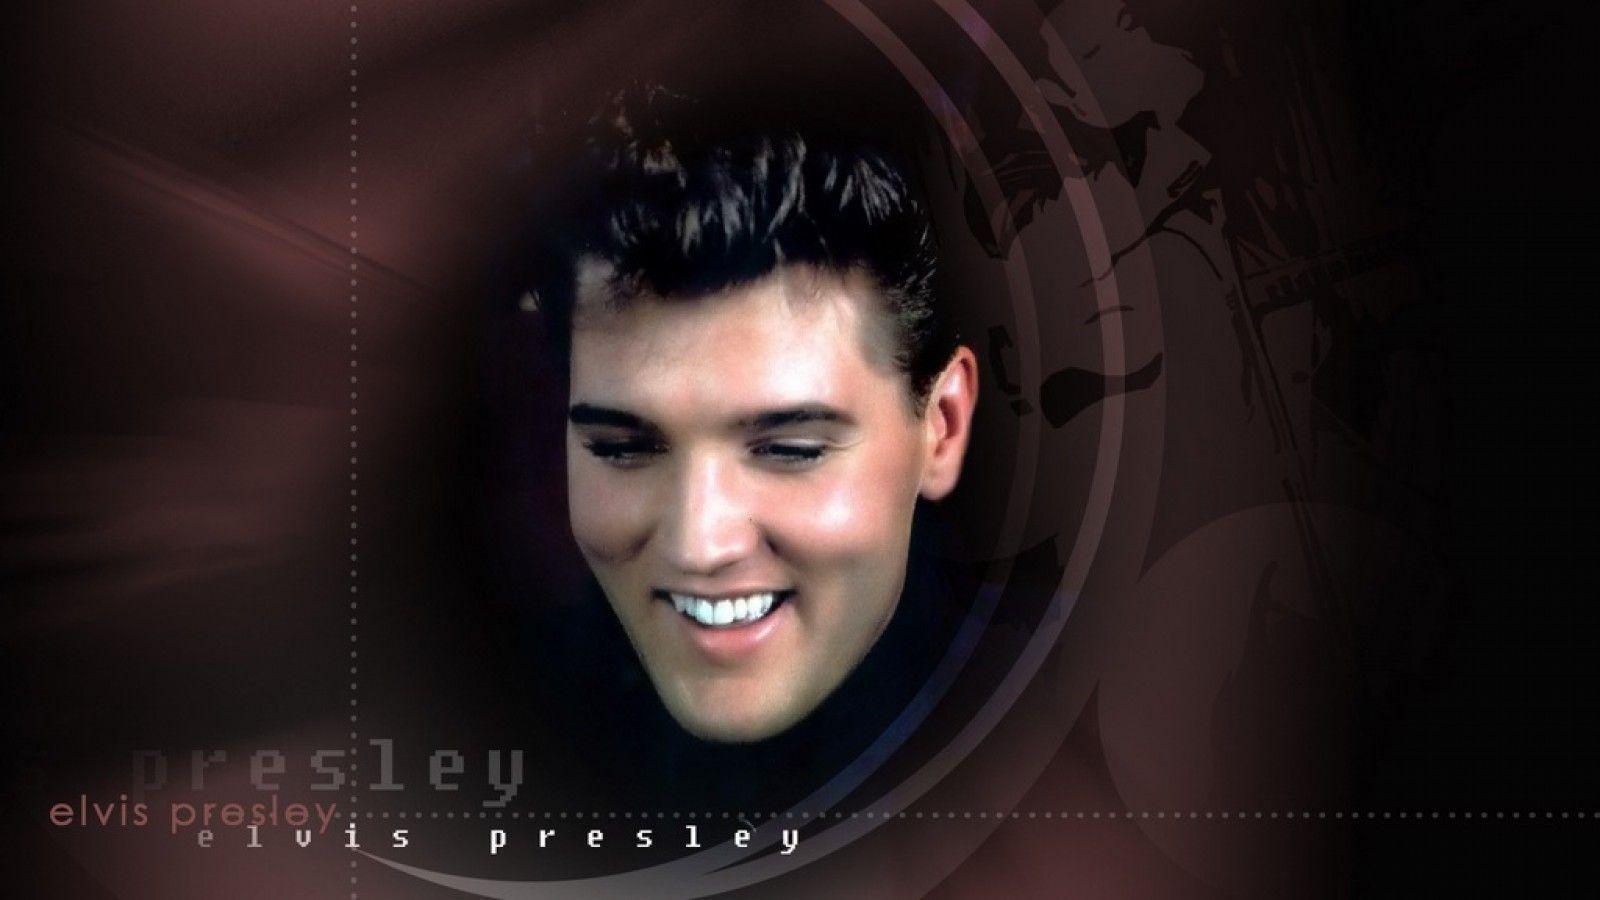 Elvis Presley 11629 Presley Wallpaper